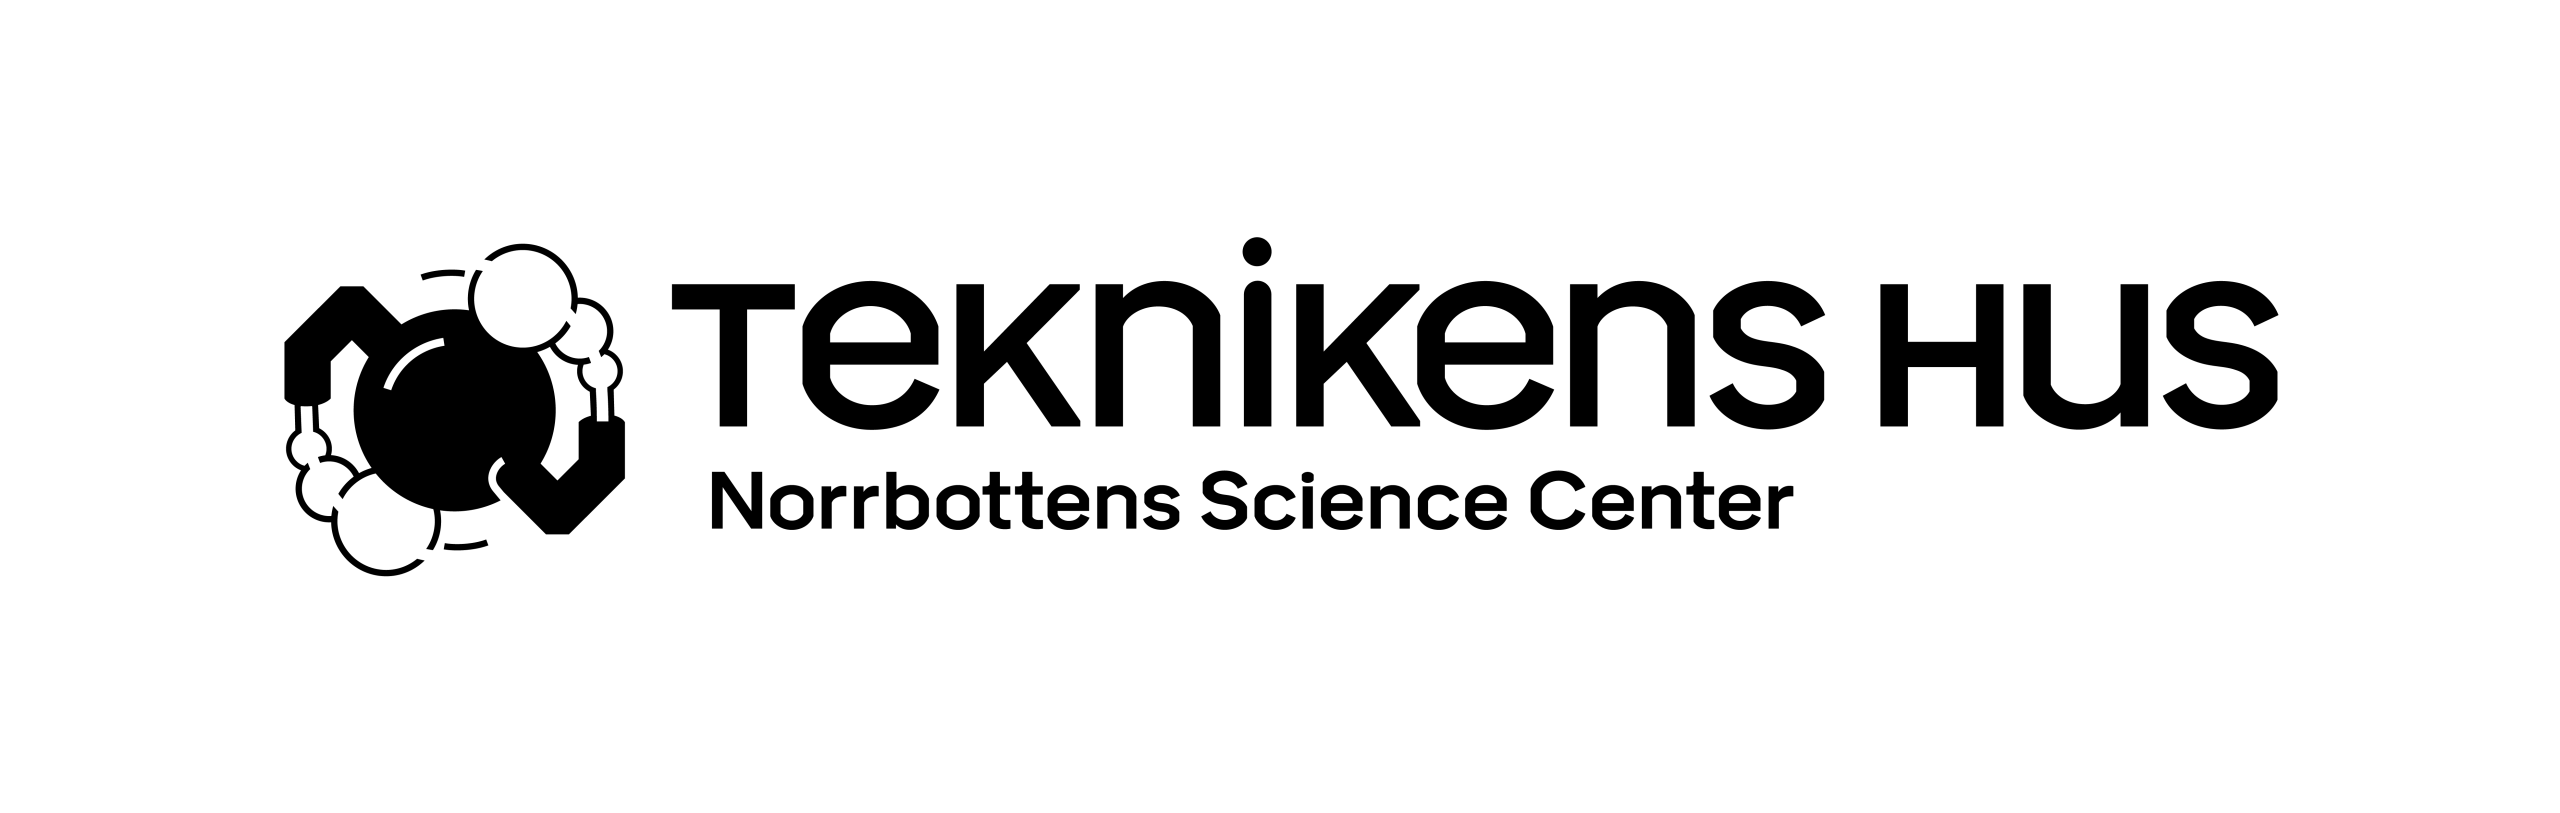 TH-logo-ligande-svart-NSC